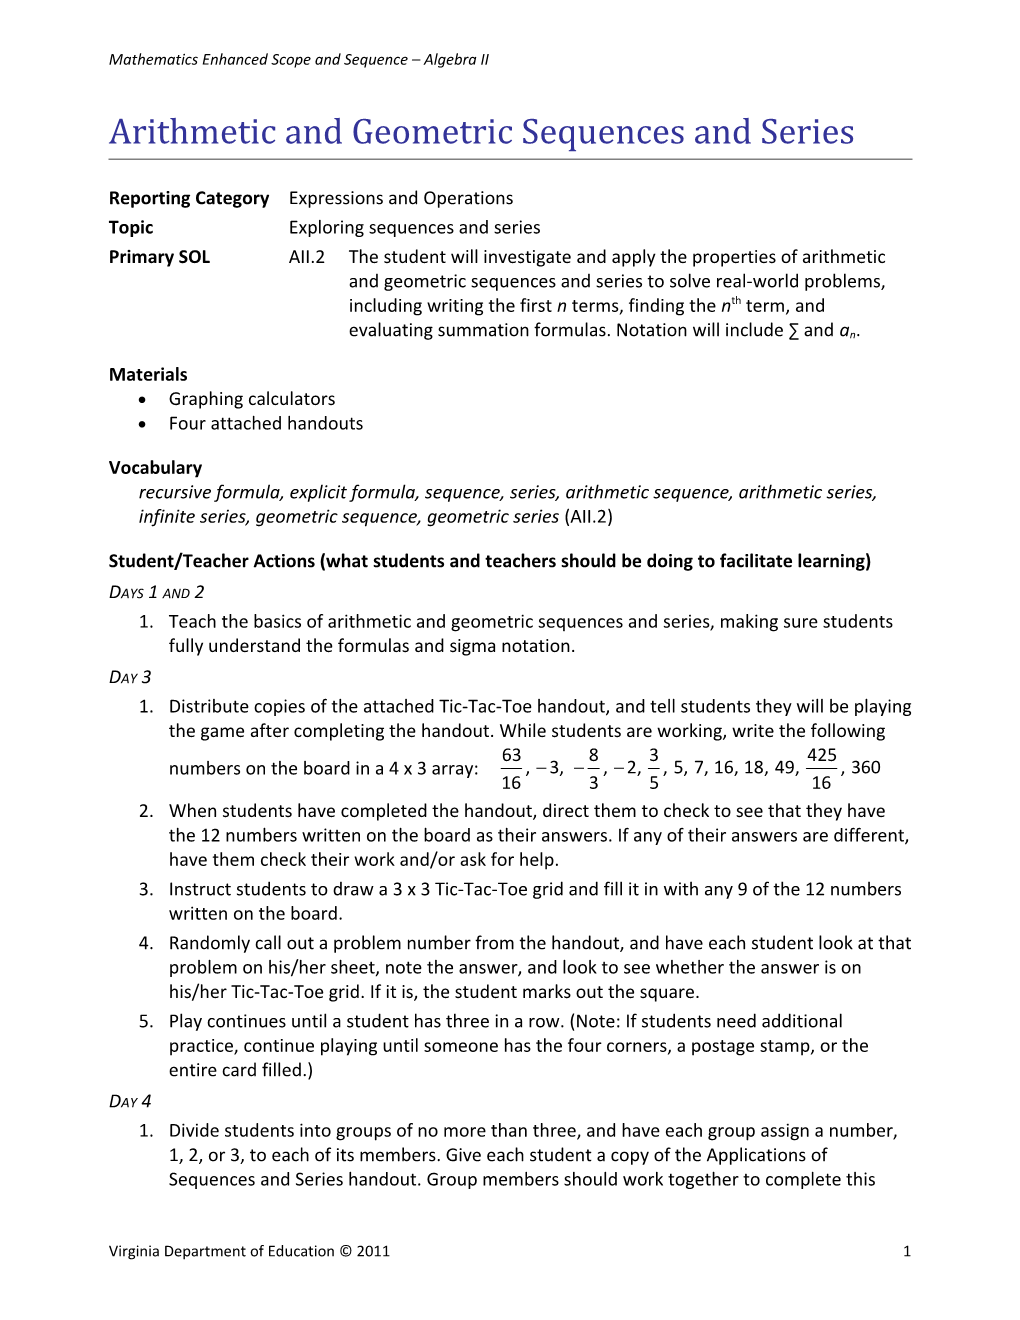 Mathematics Enhanced Scope and Sequence Algebra II s1